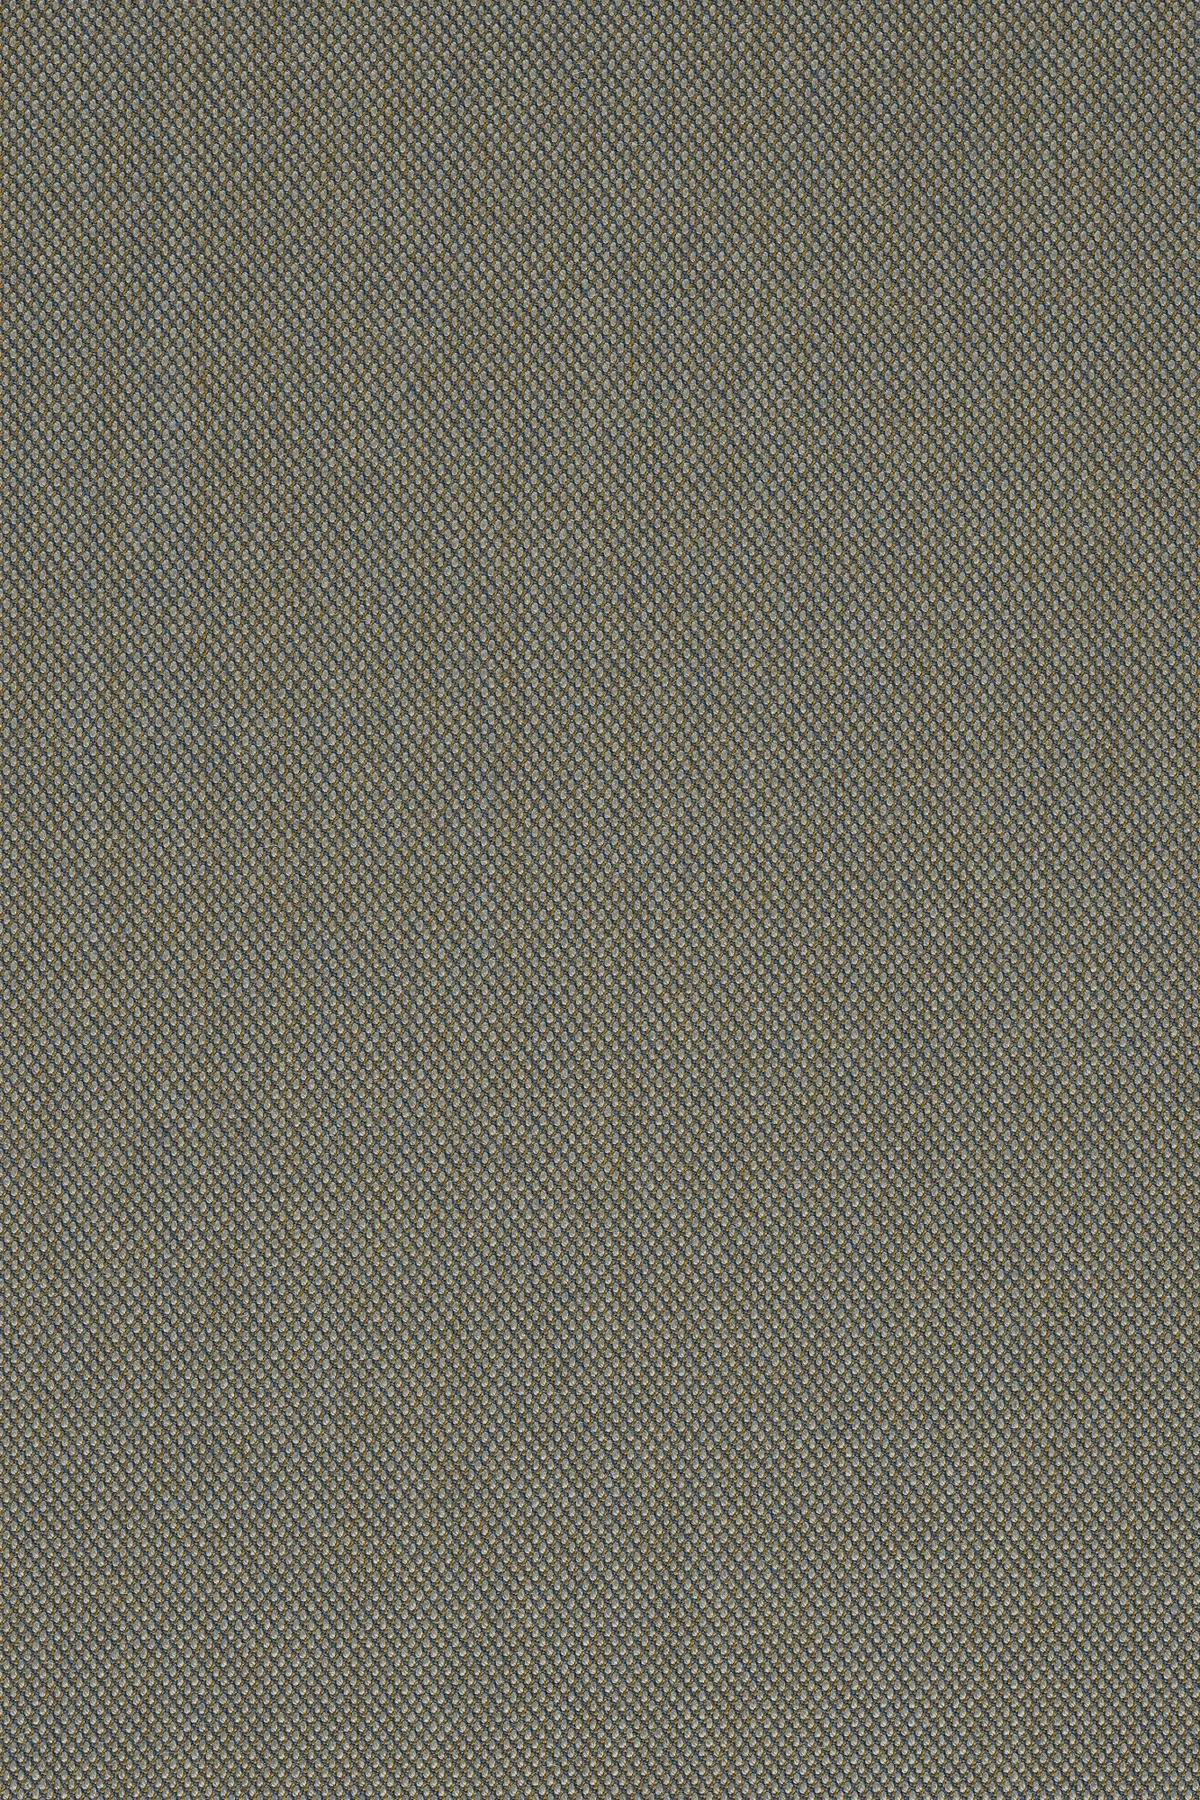 Fabric sample Steelcut Trio 3 266 brown